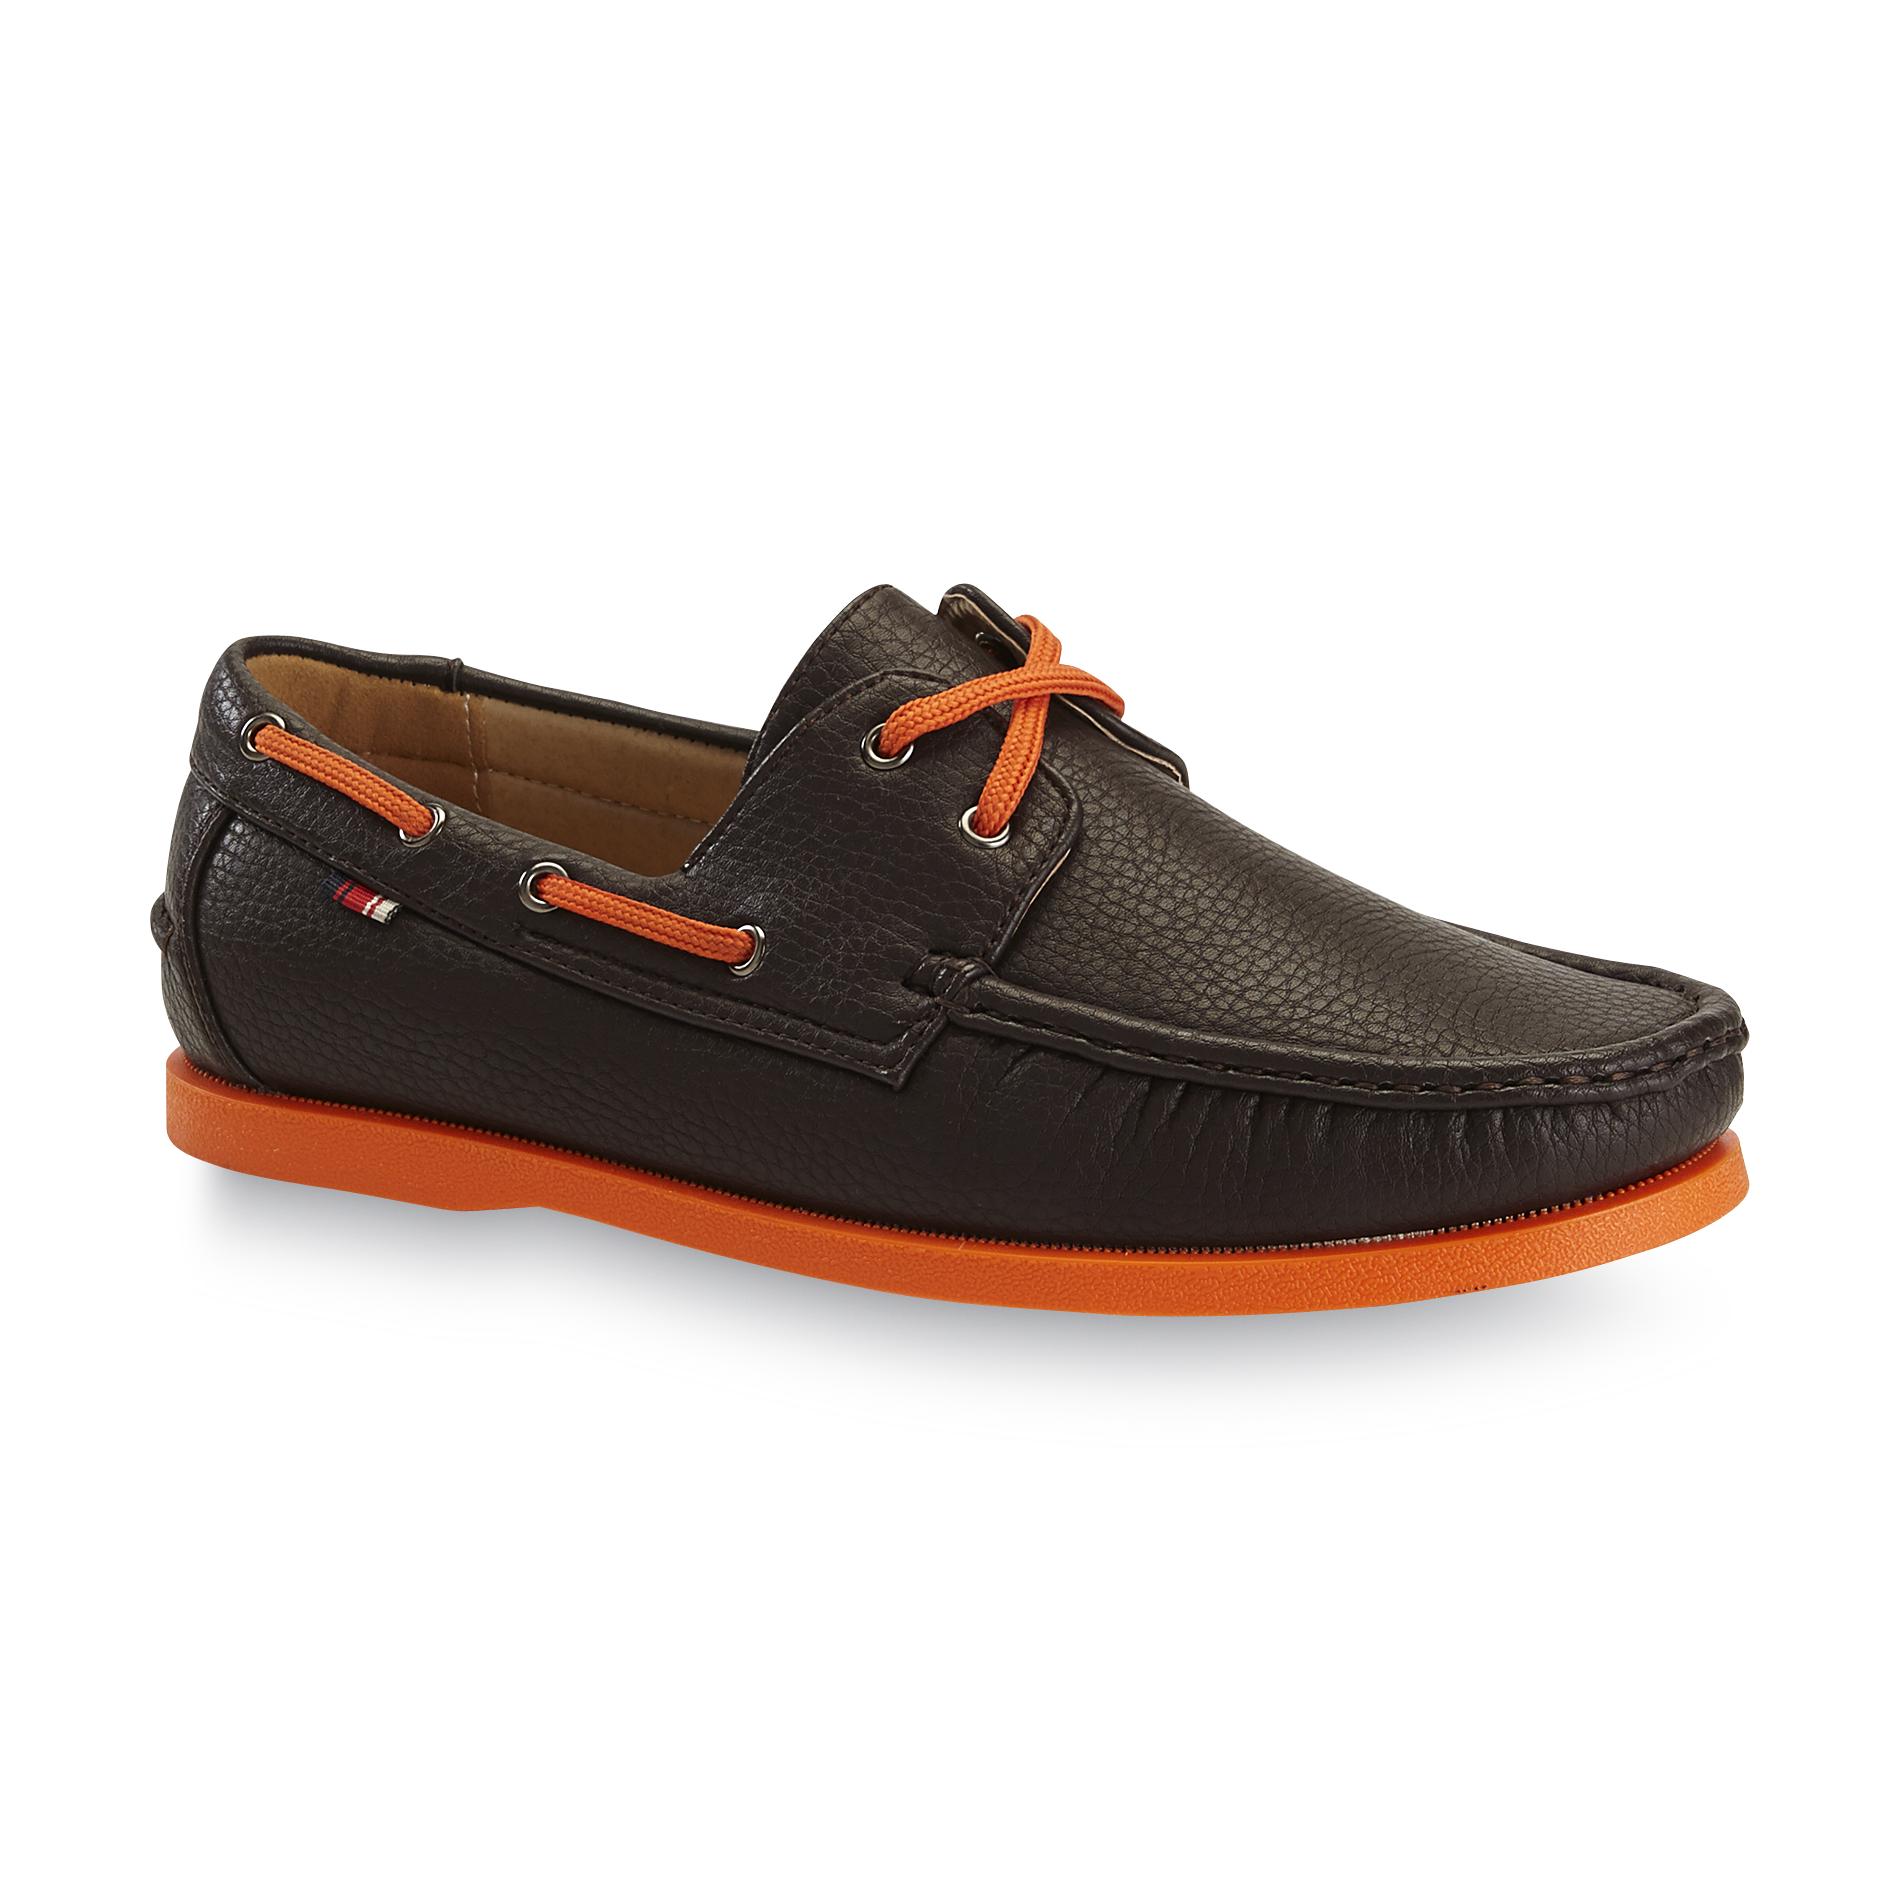 Phat Farm Men's Lagos Brown/Orange Boat Shoe